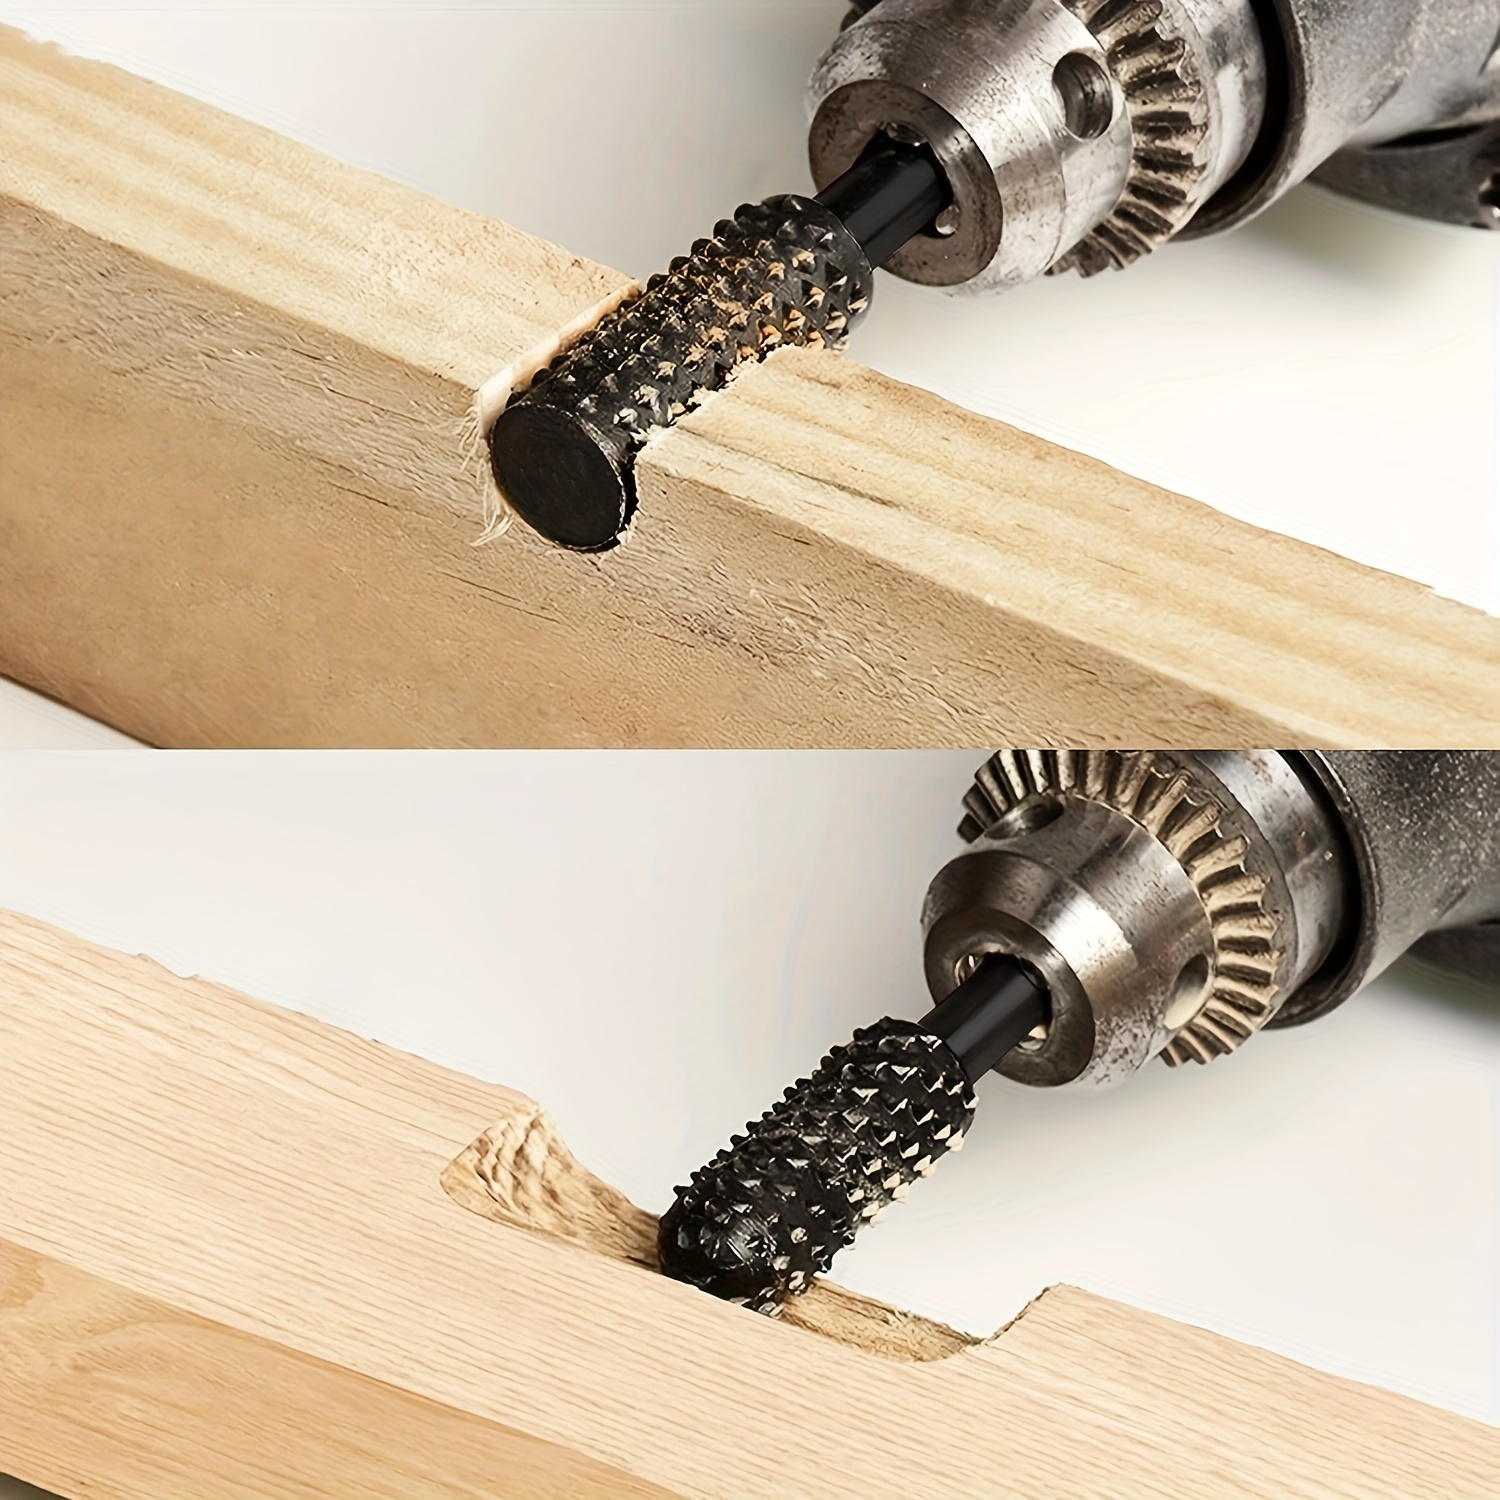 

10pcs Wood Carving File Rasp Drill Bit, 1/4" 6mm Rotary Rasp Drill Bit Set, Diy Woodworking Rotating Embossed Chisel Shaped Shank Tool Burr Power Tools For Engraving Polishing Grinding